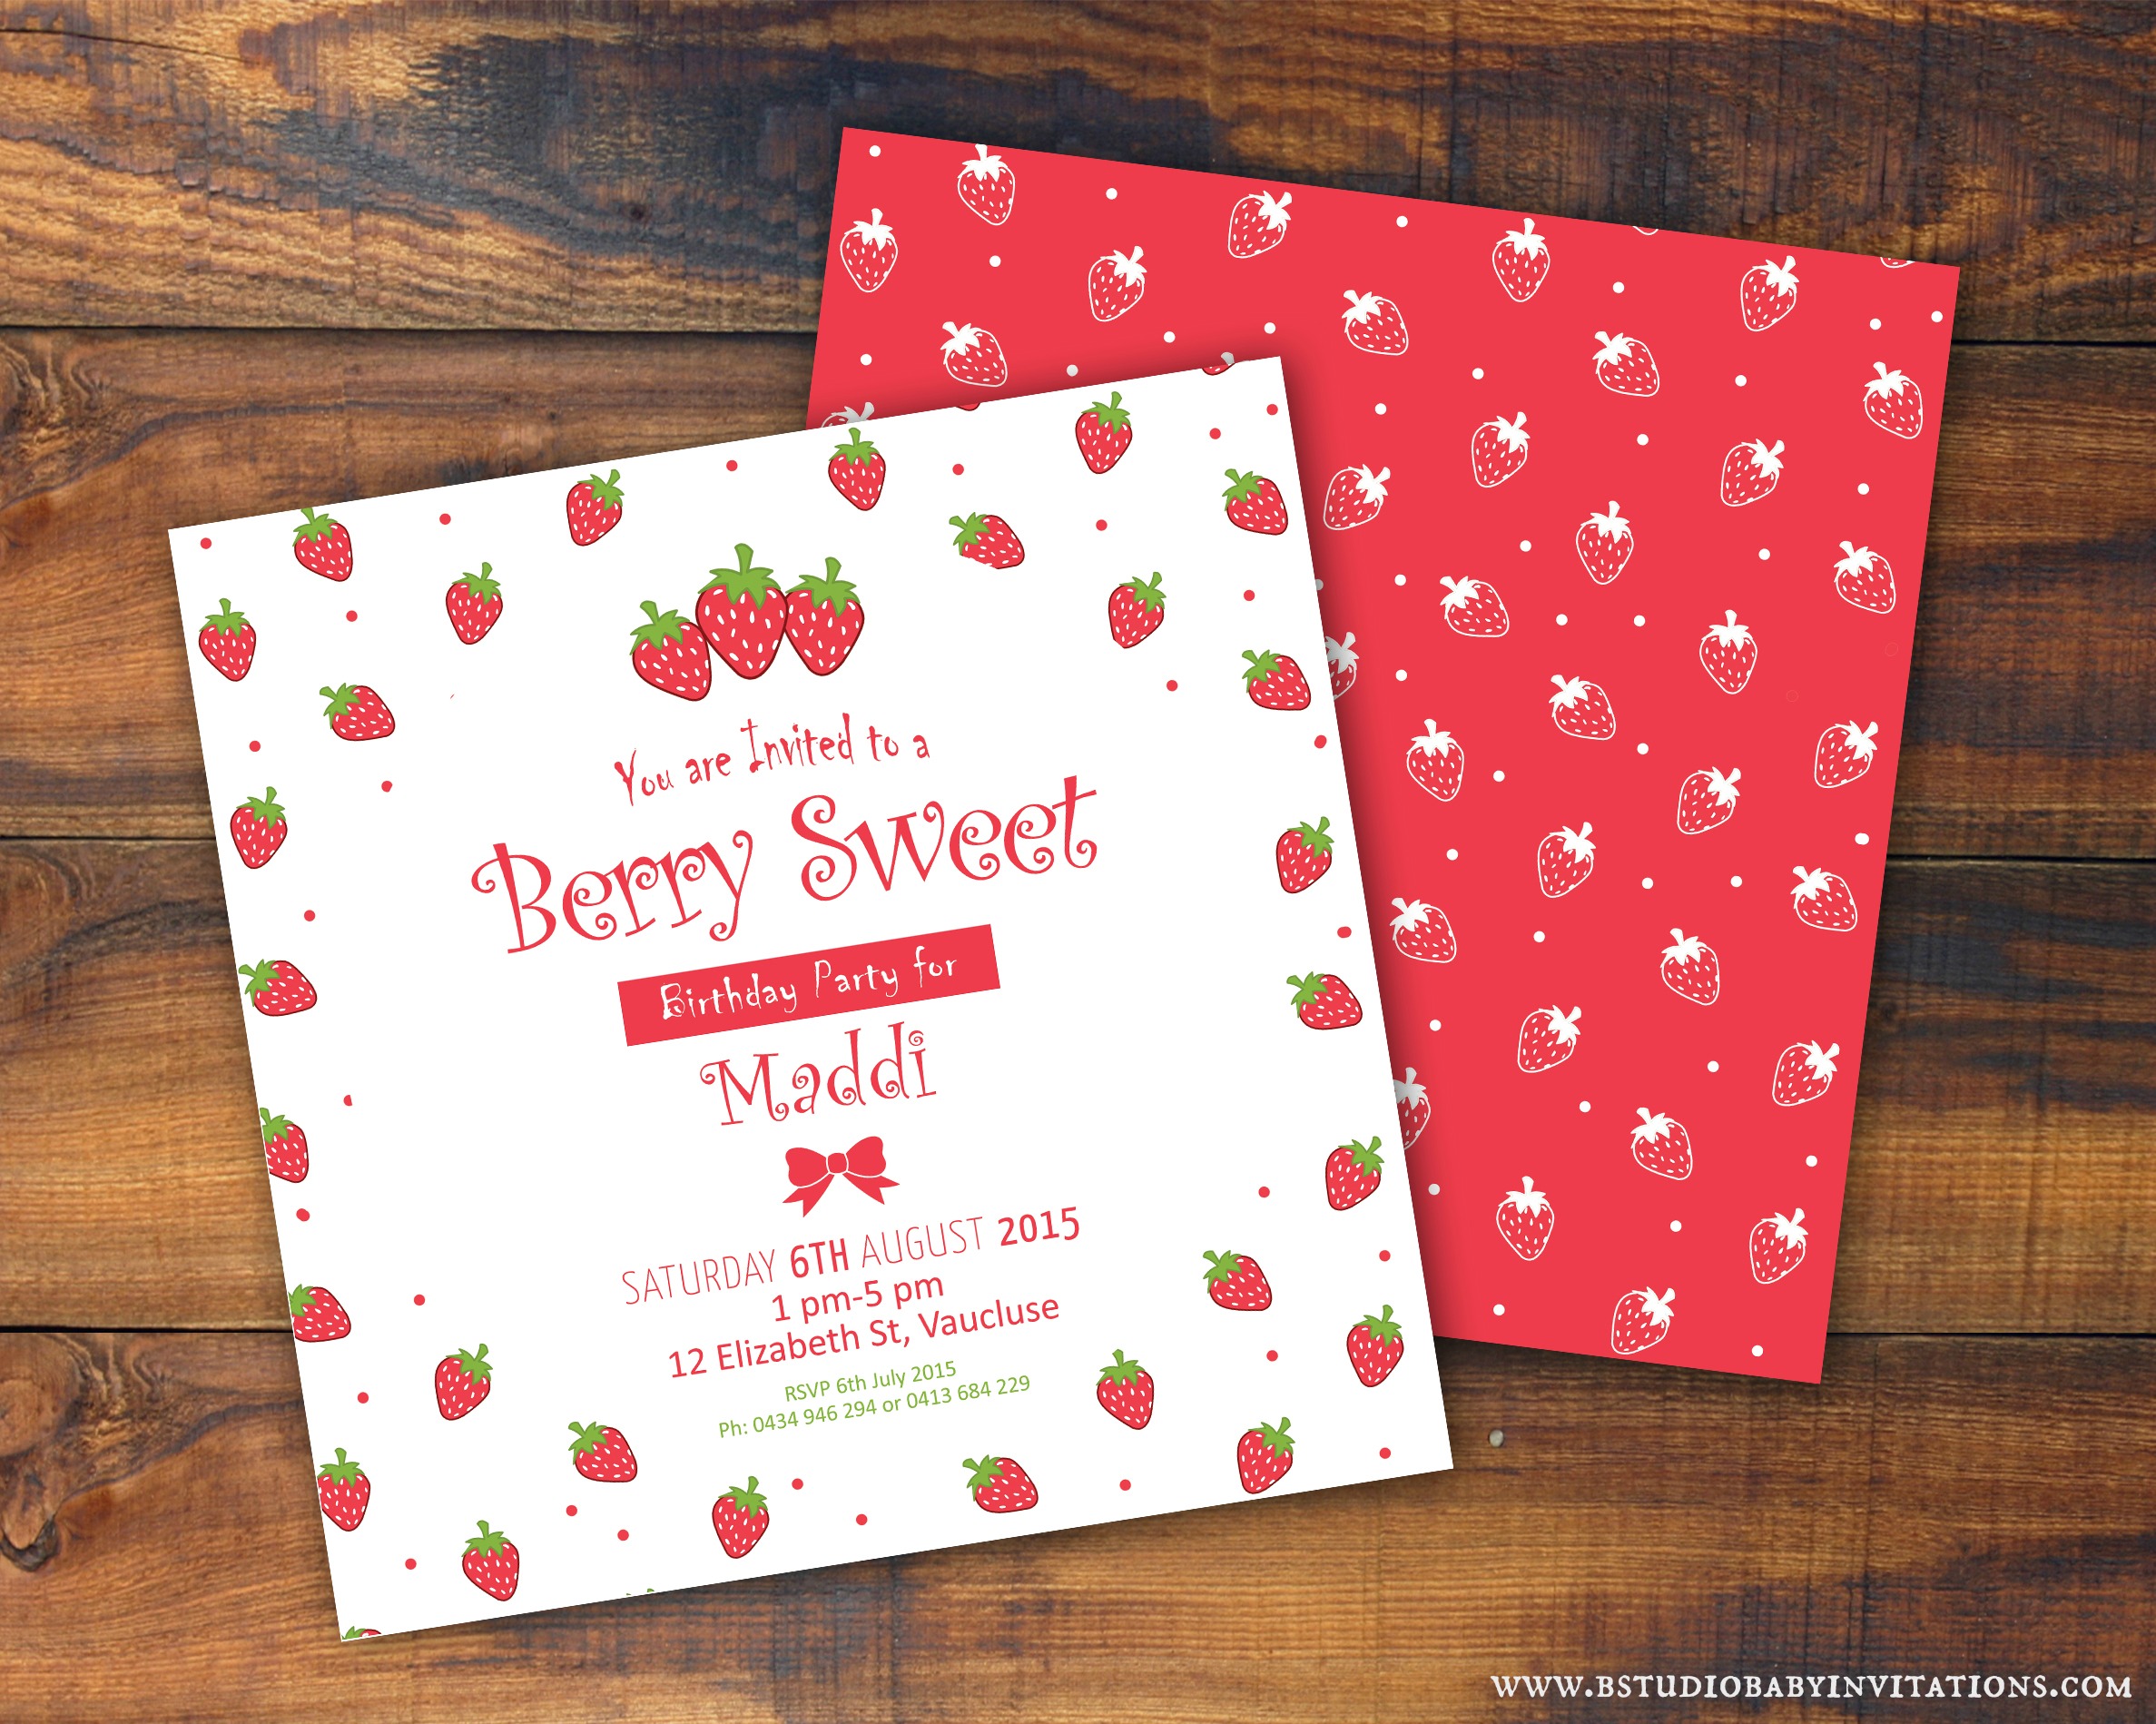 Berry Sweet Invitation - B Studio Baby Invitations